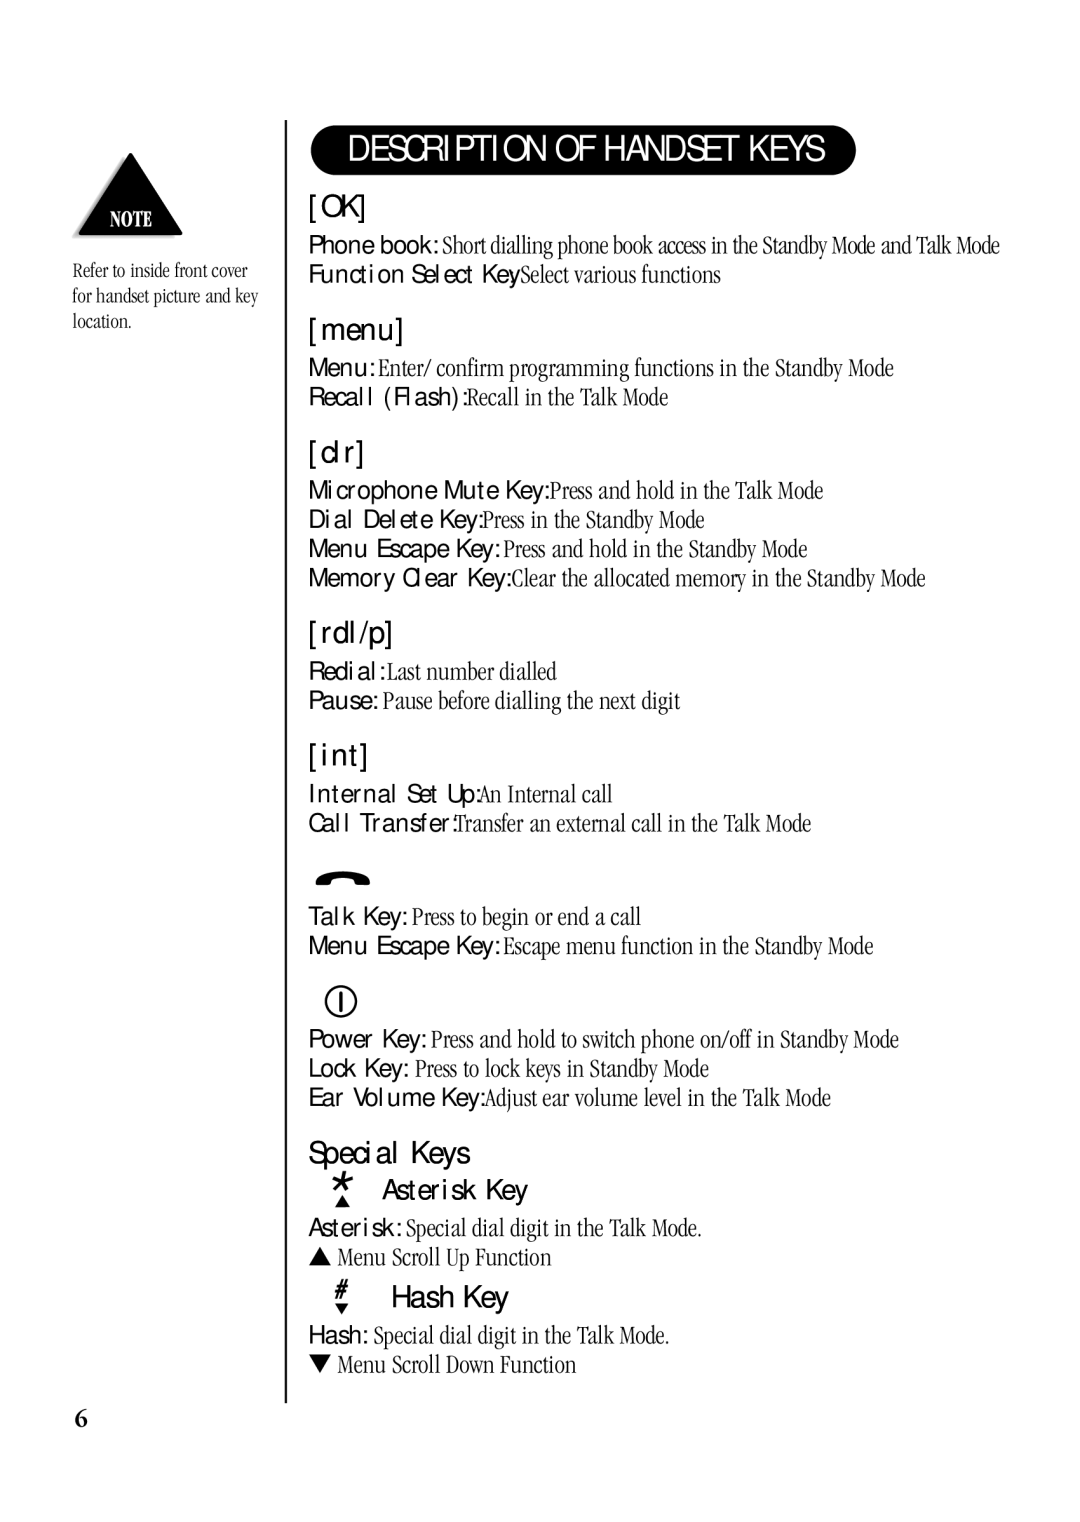 Uniden DECT 1811 manual Description of Handset Keys 